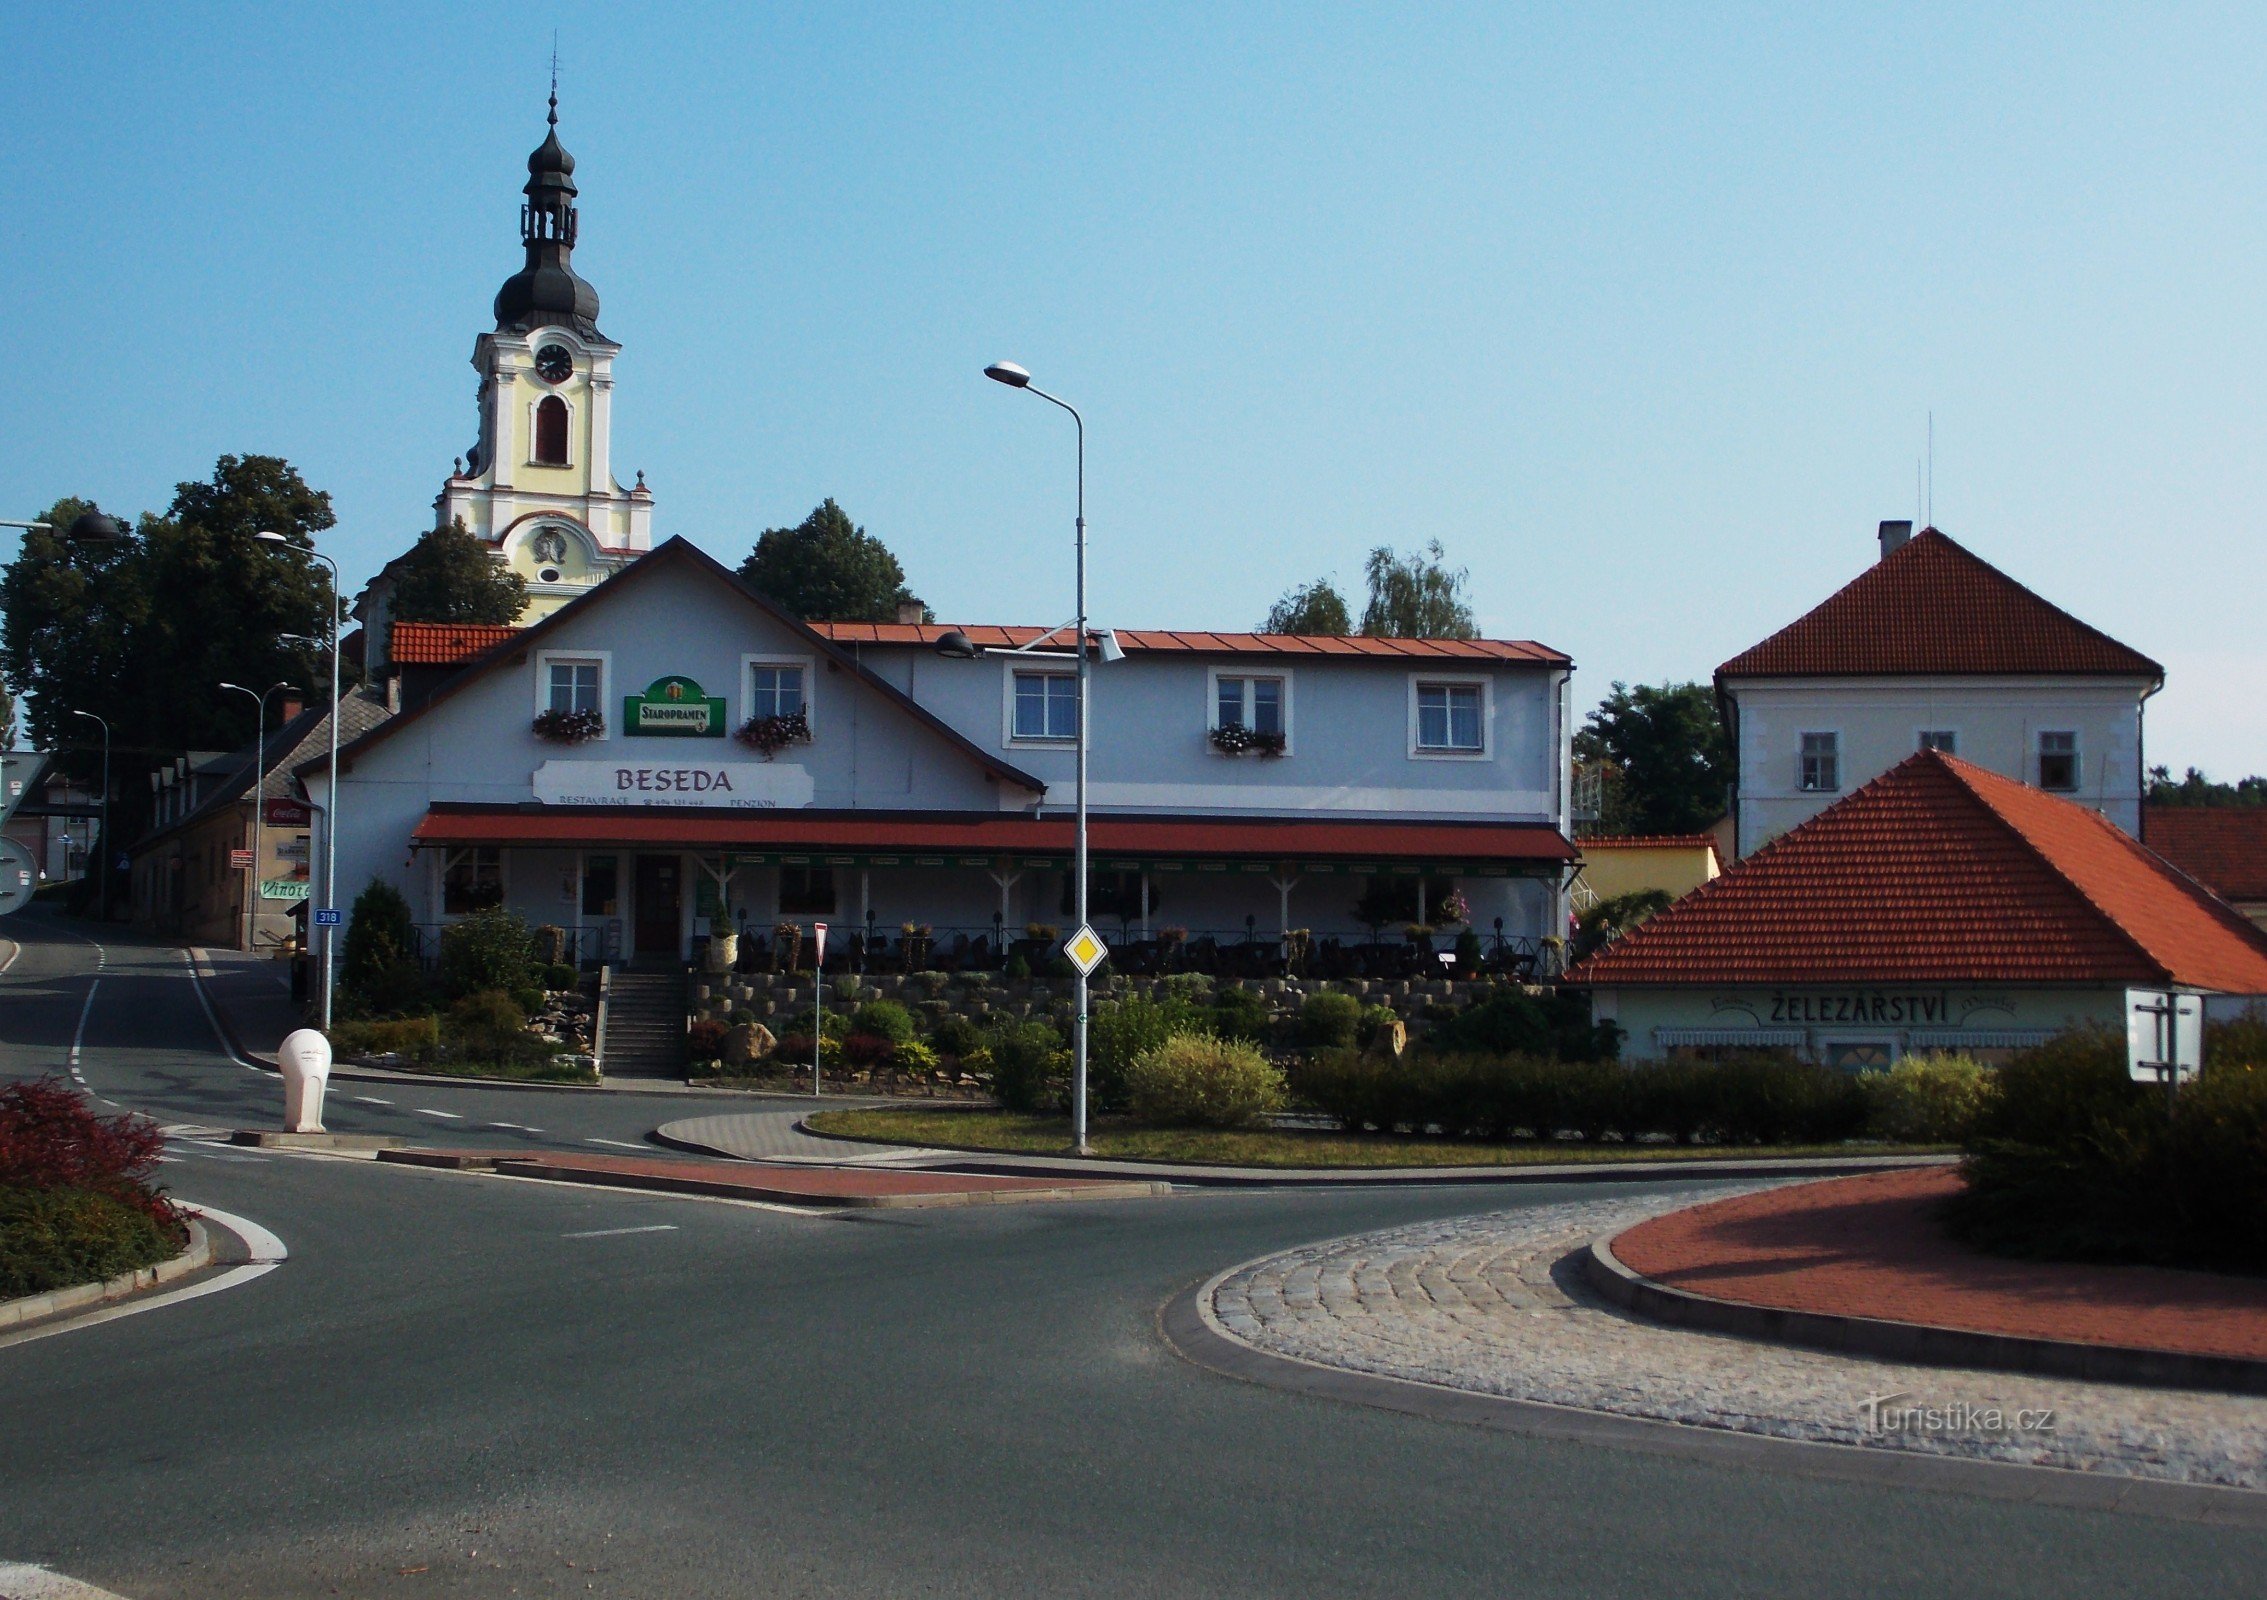 A la ciudad de Častolovice